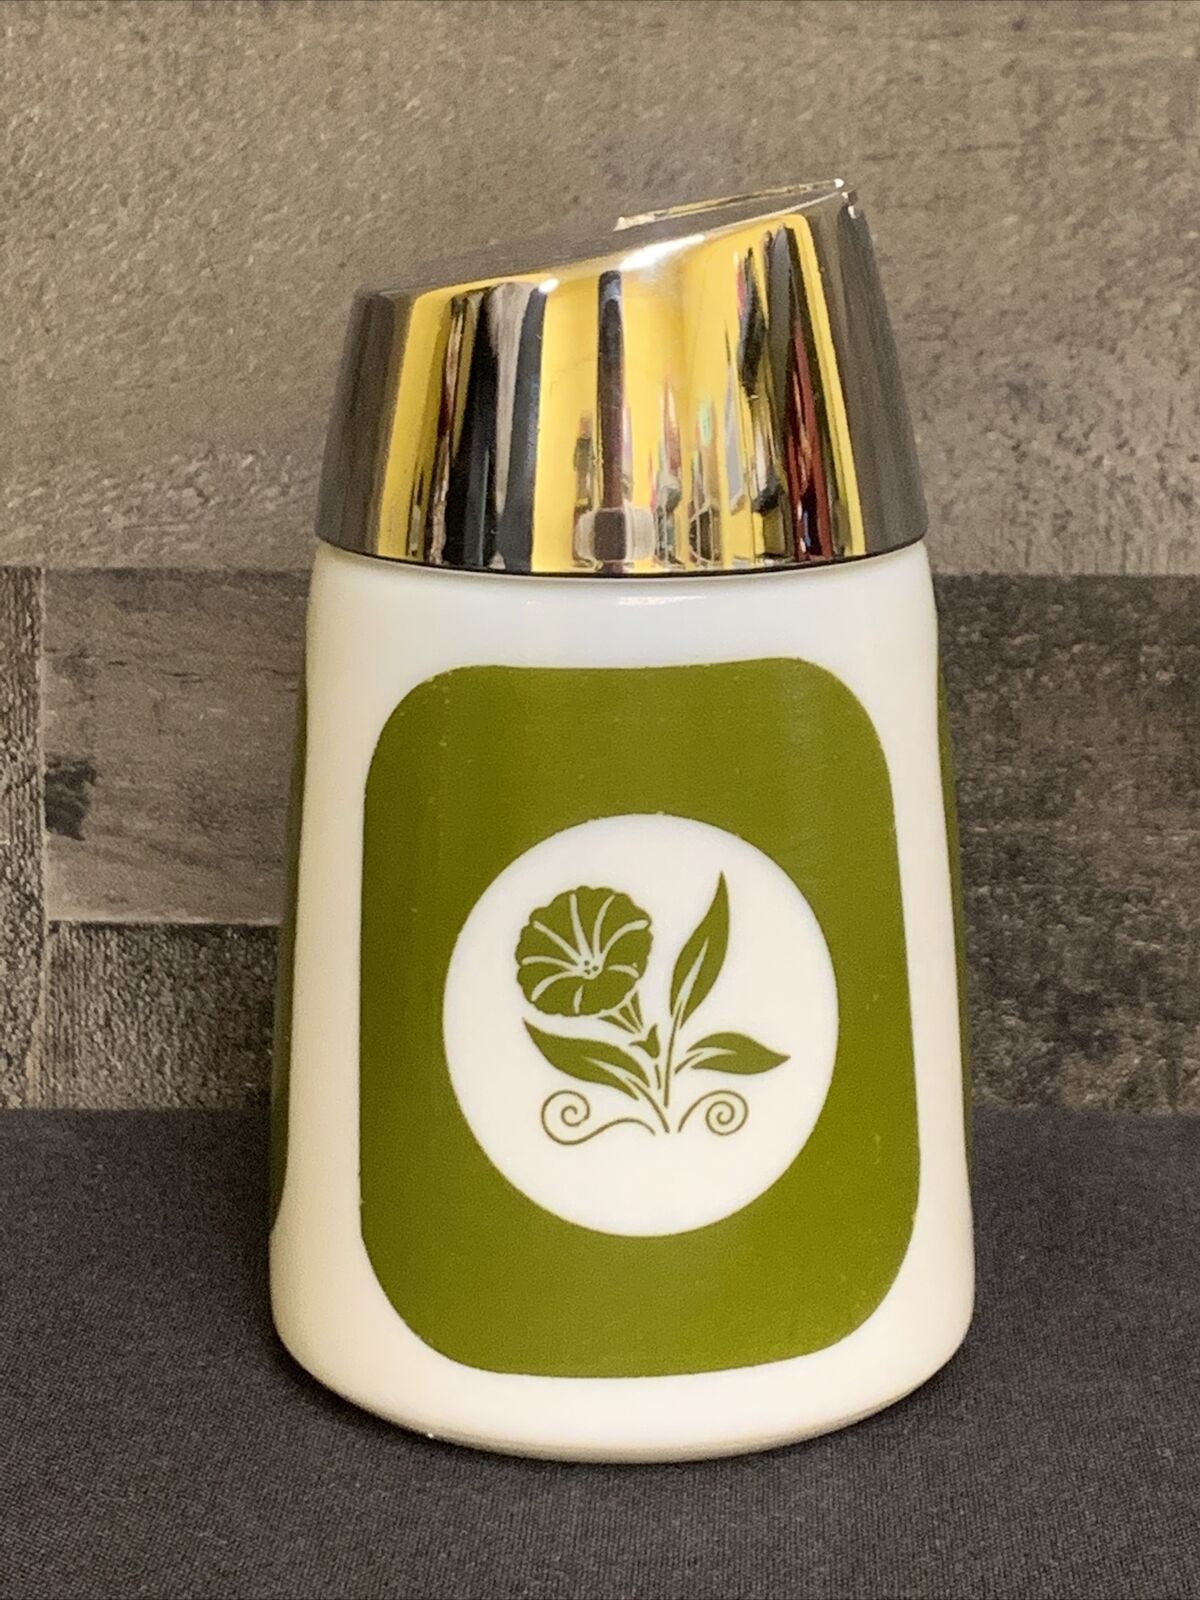 Vintage Milk Glass Sugar Shaker Santa Barbara Dispensers Inc Retro Green Flowers